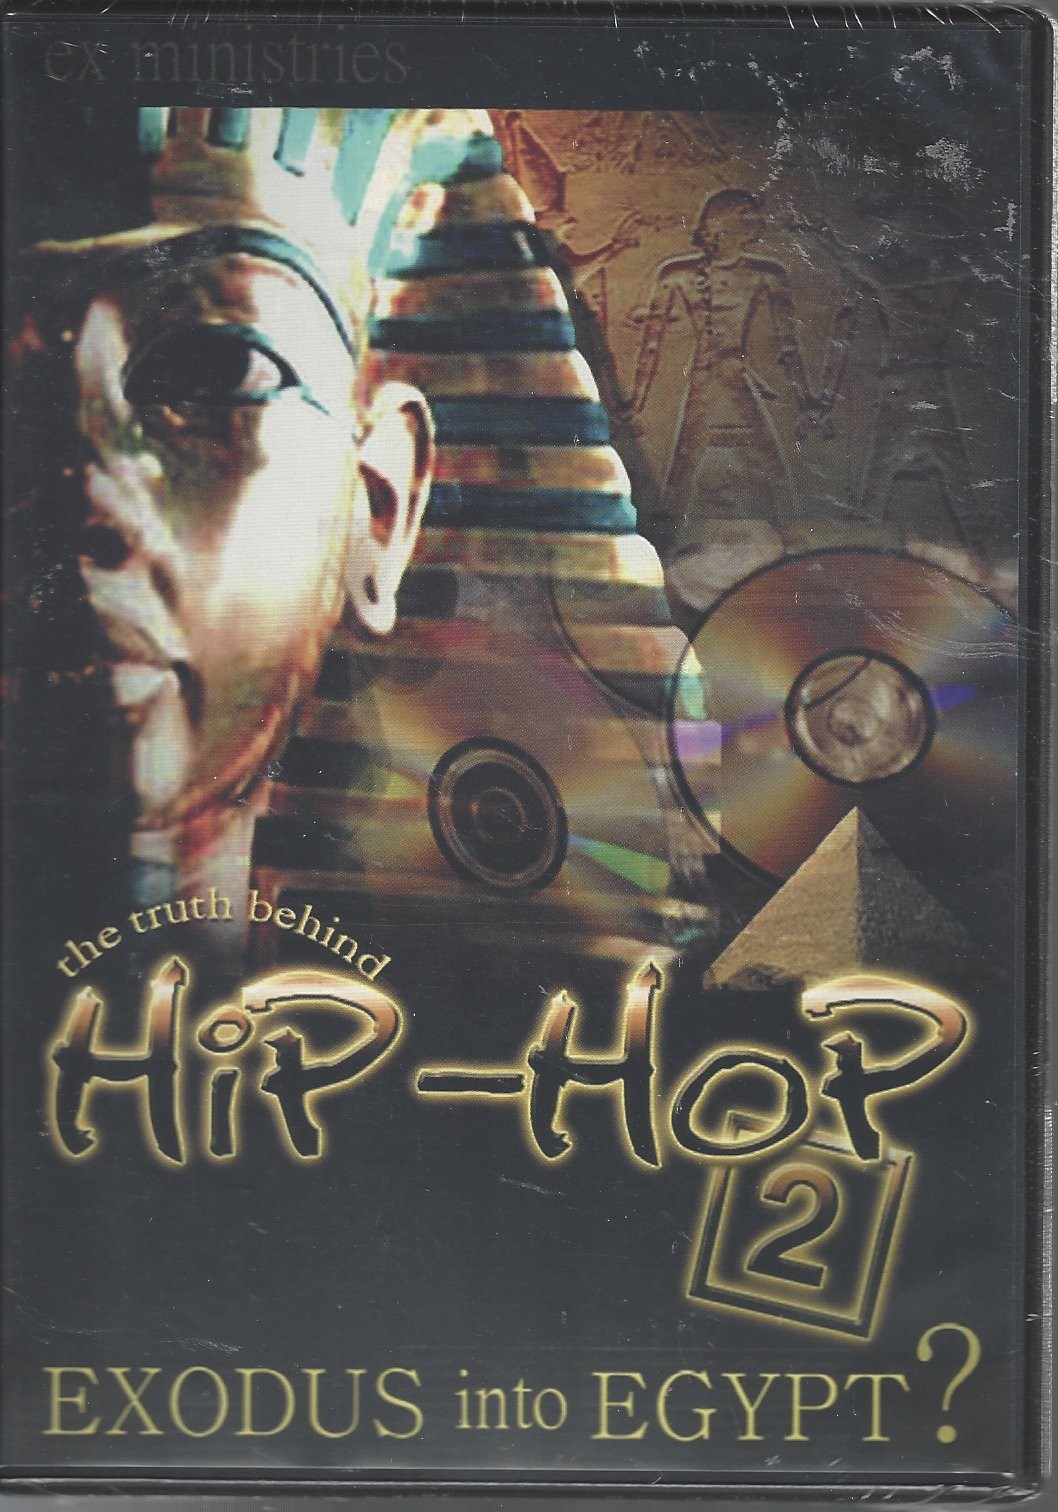 Hip Hop 2 front